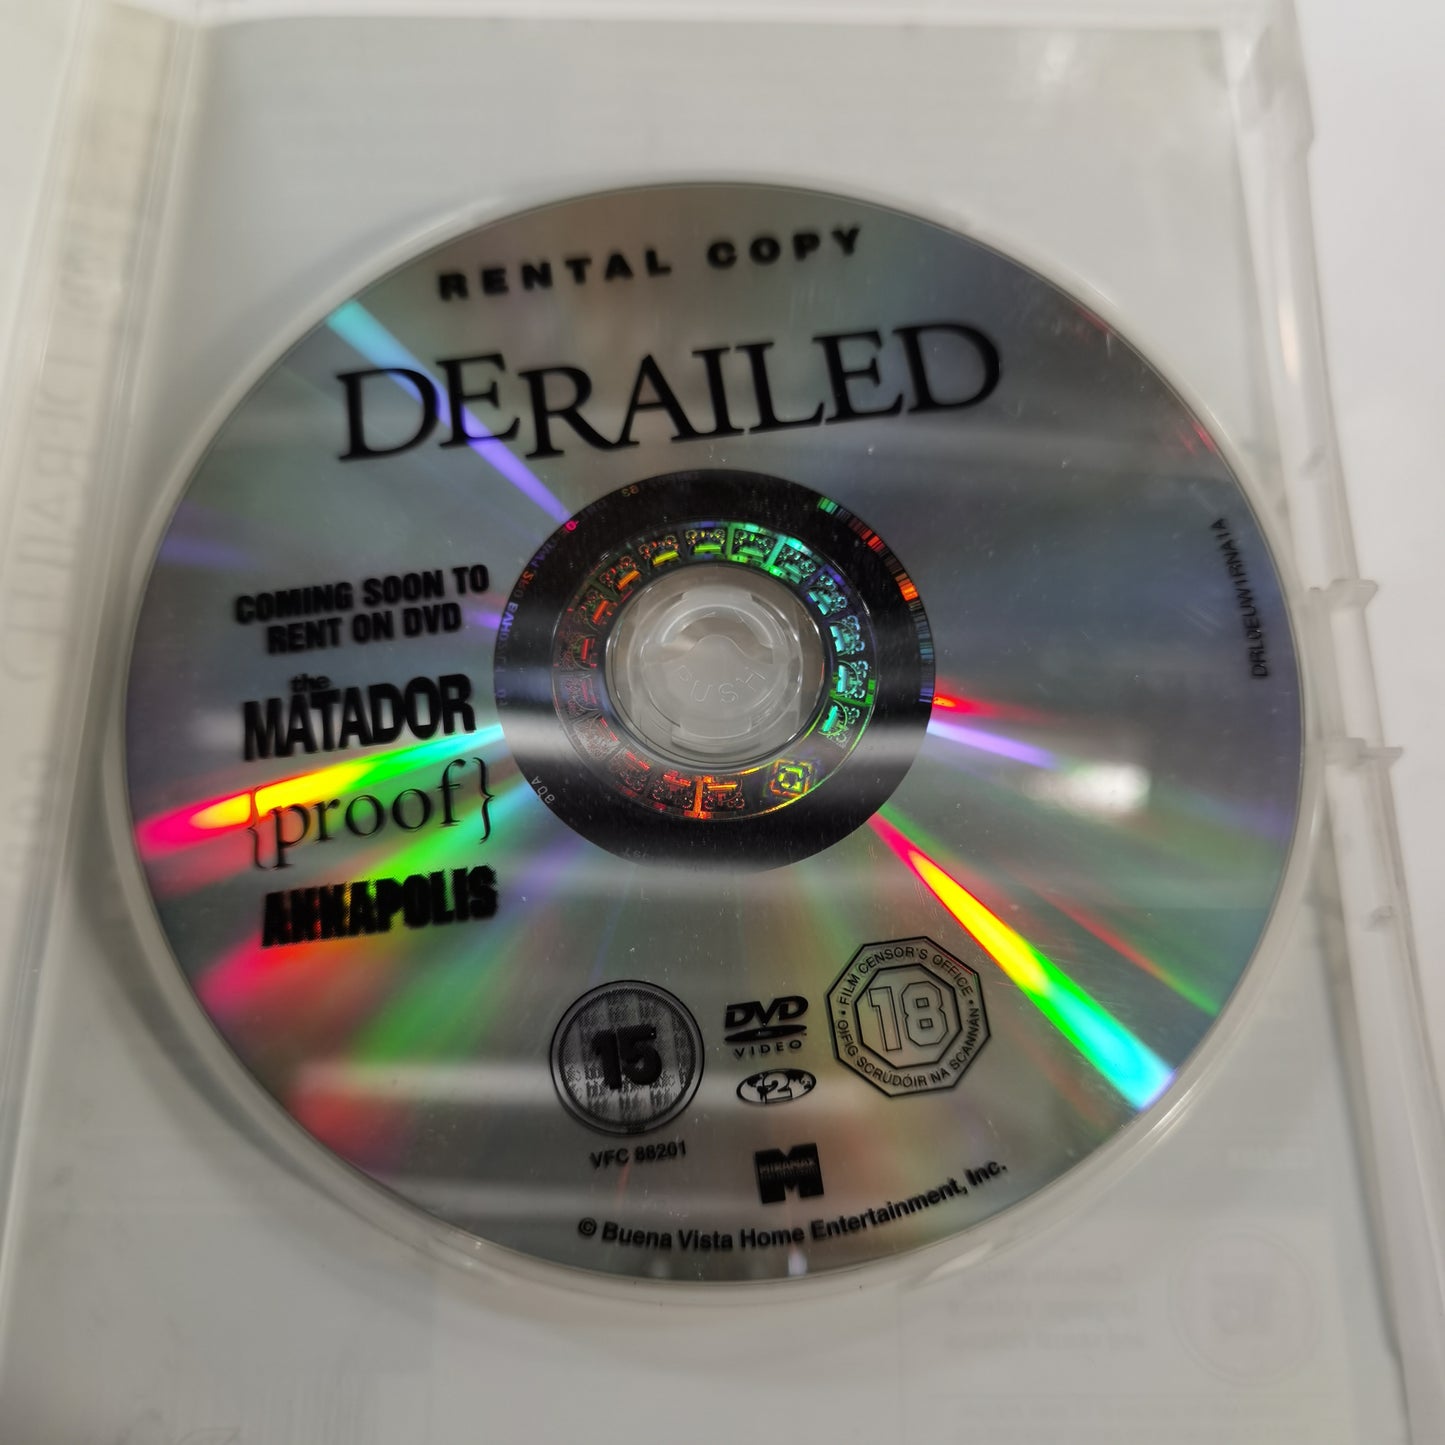 Derailed (2005) - DVD UK RC